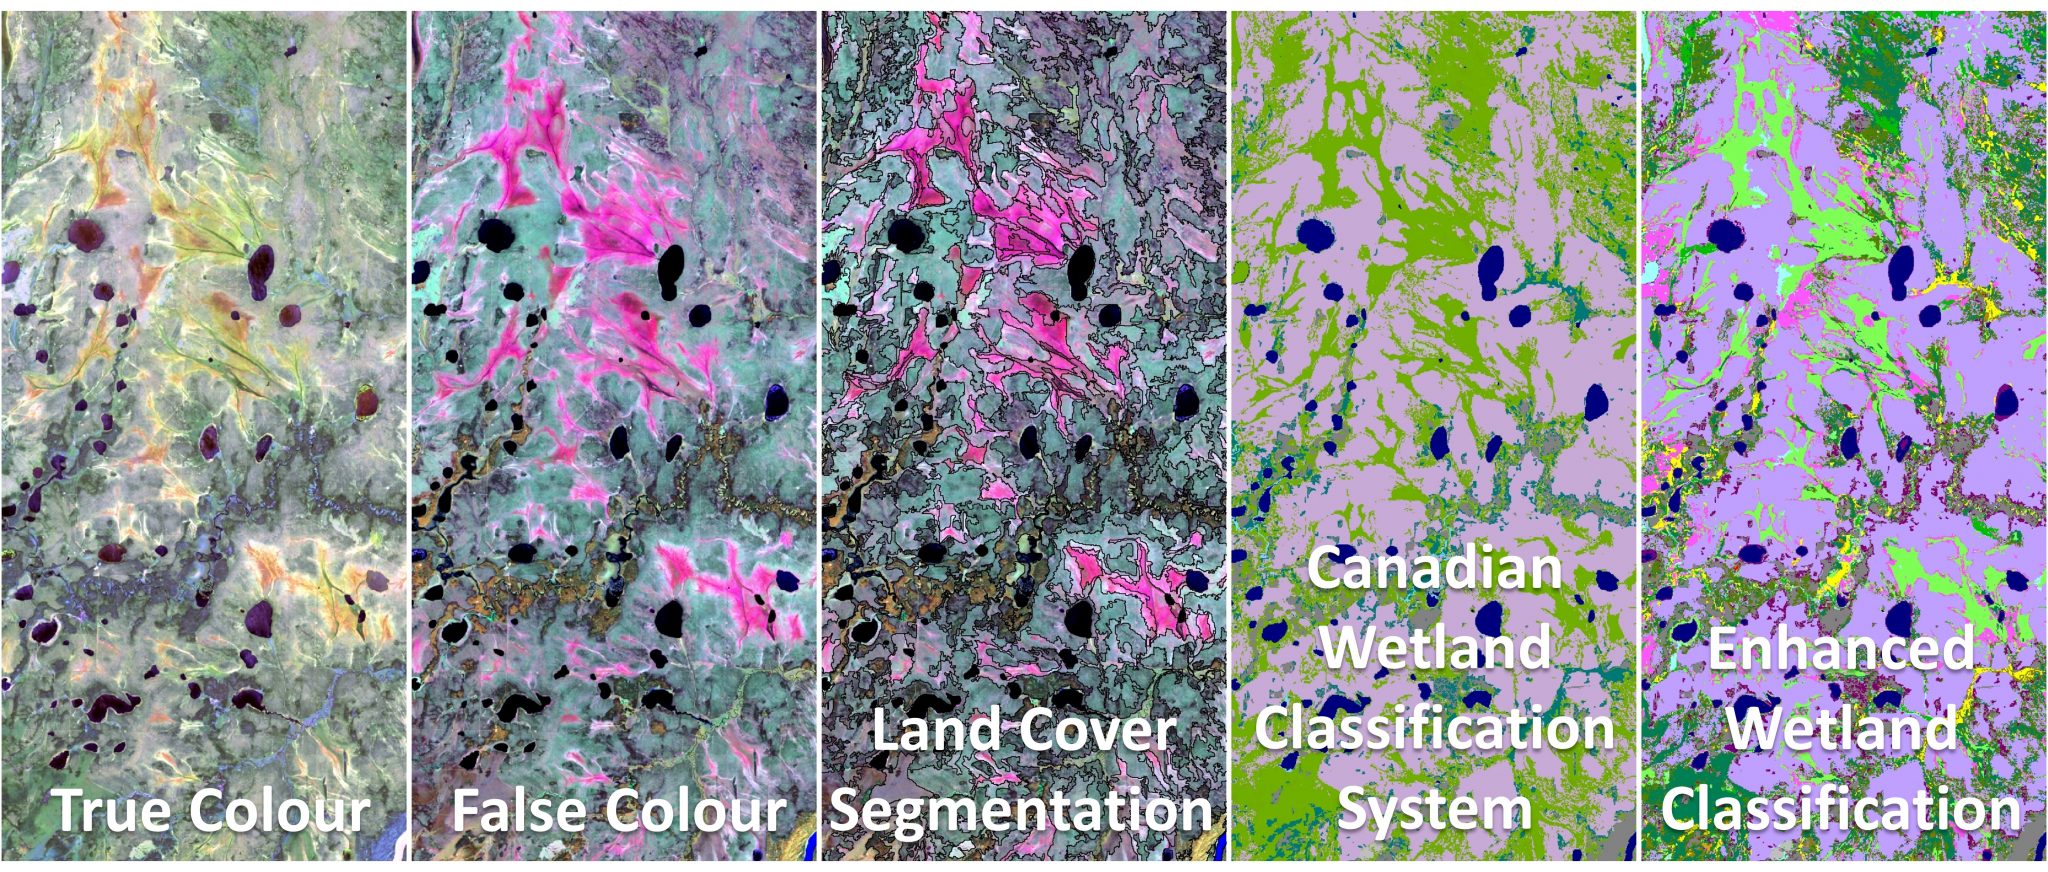 Visual Workflow for Enhanced Wetland Classification. (Left to right) True colour, false colour, land cover segmentation, Canadian Wetland Classification System, and Enhanced Wetland Classification.